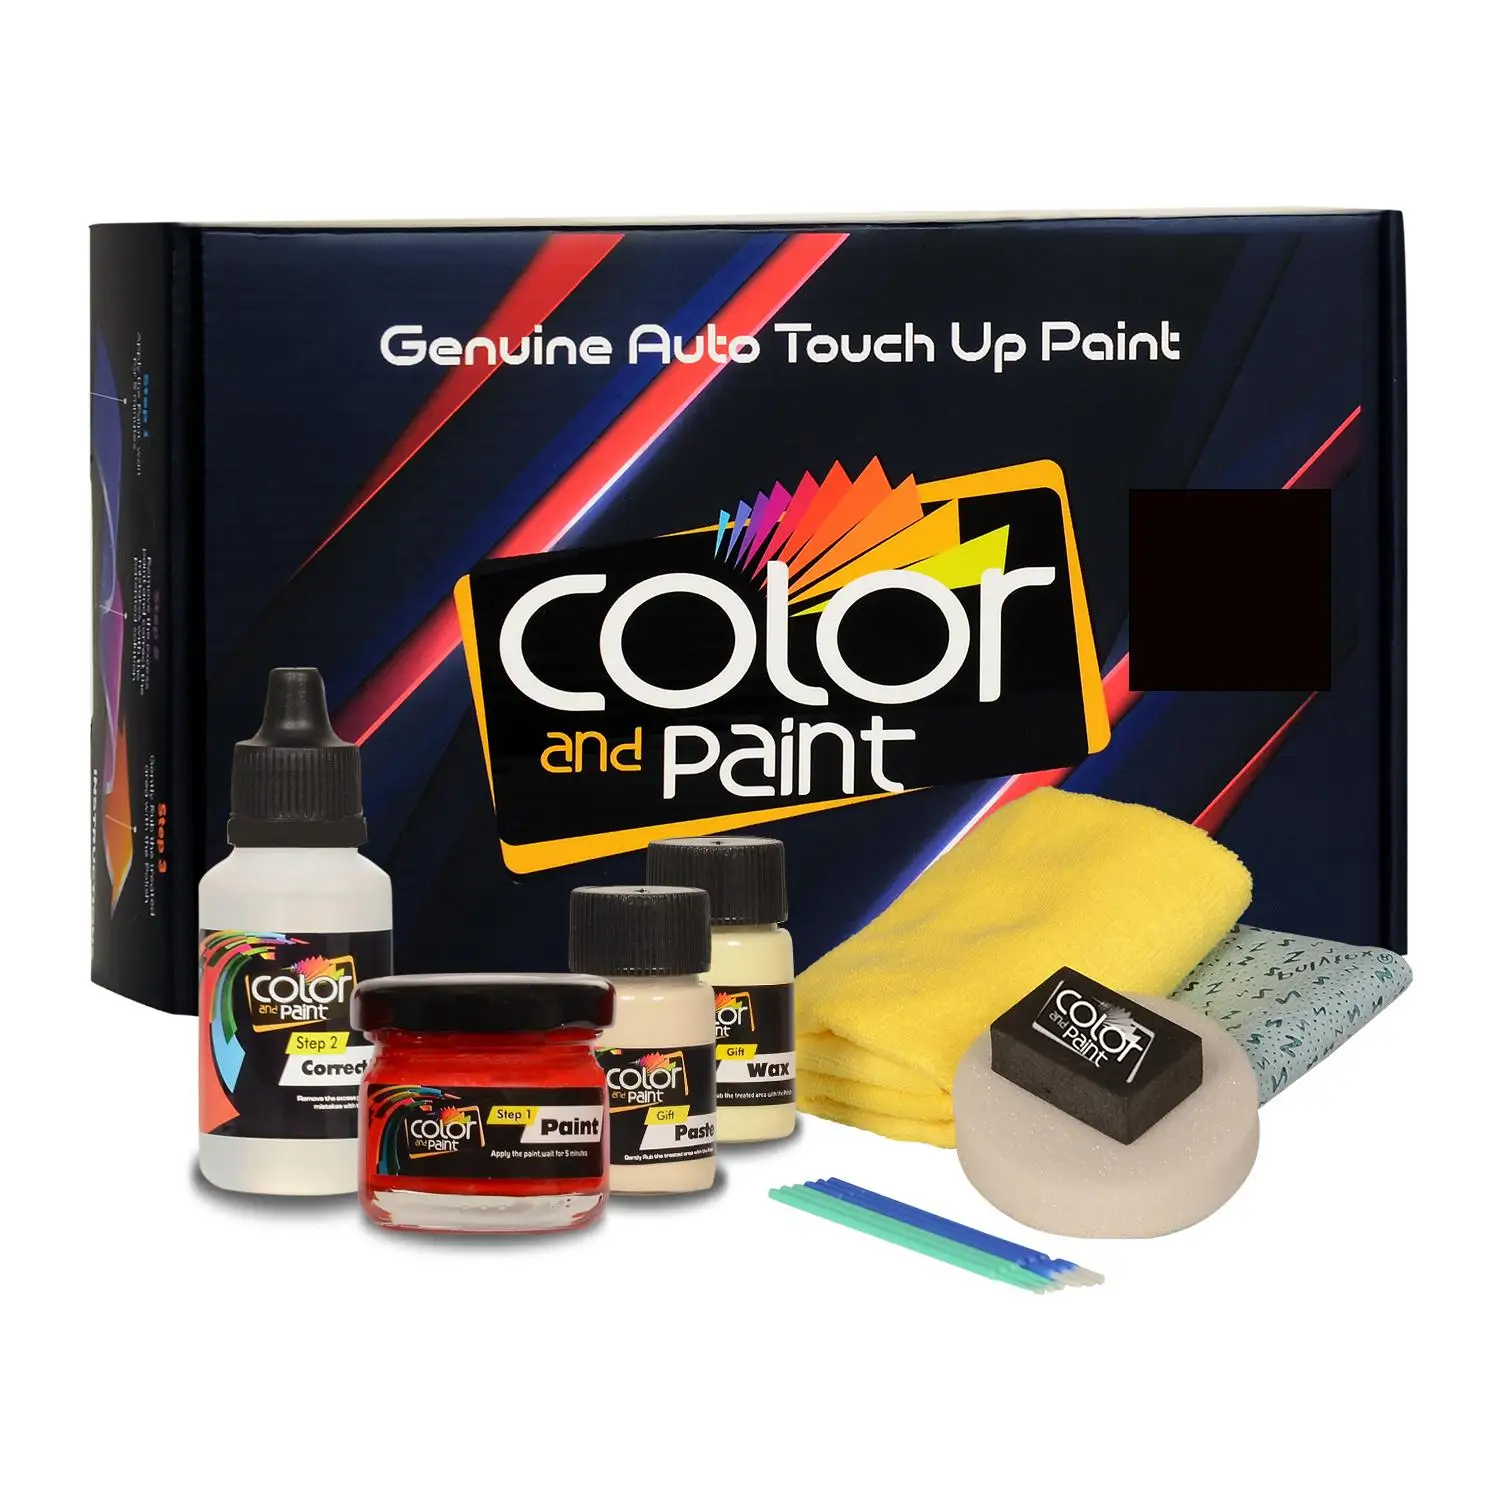 

Color and Paint compatible with Porsche Automotive Touch Up Paint - BURGUNDERROT - 2424 - Basic Care